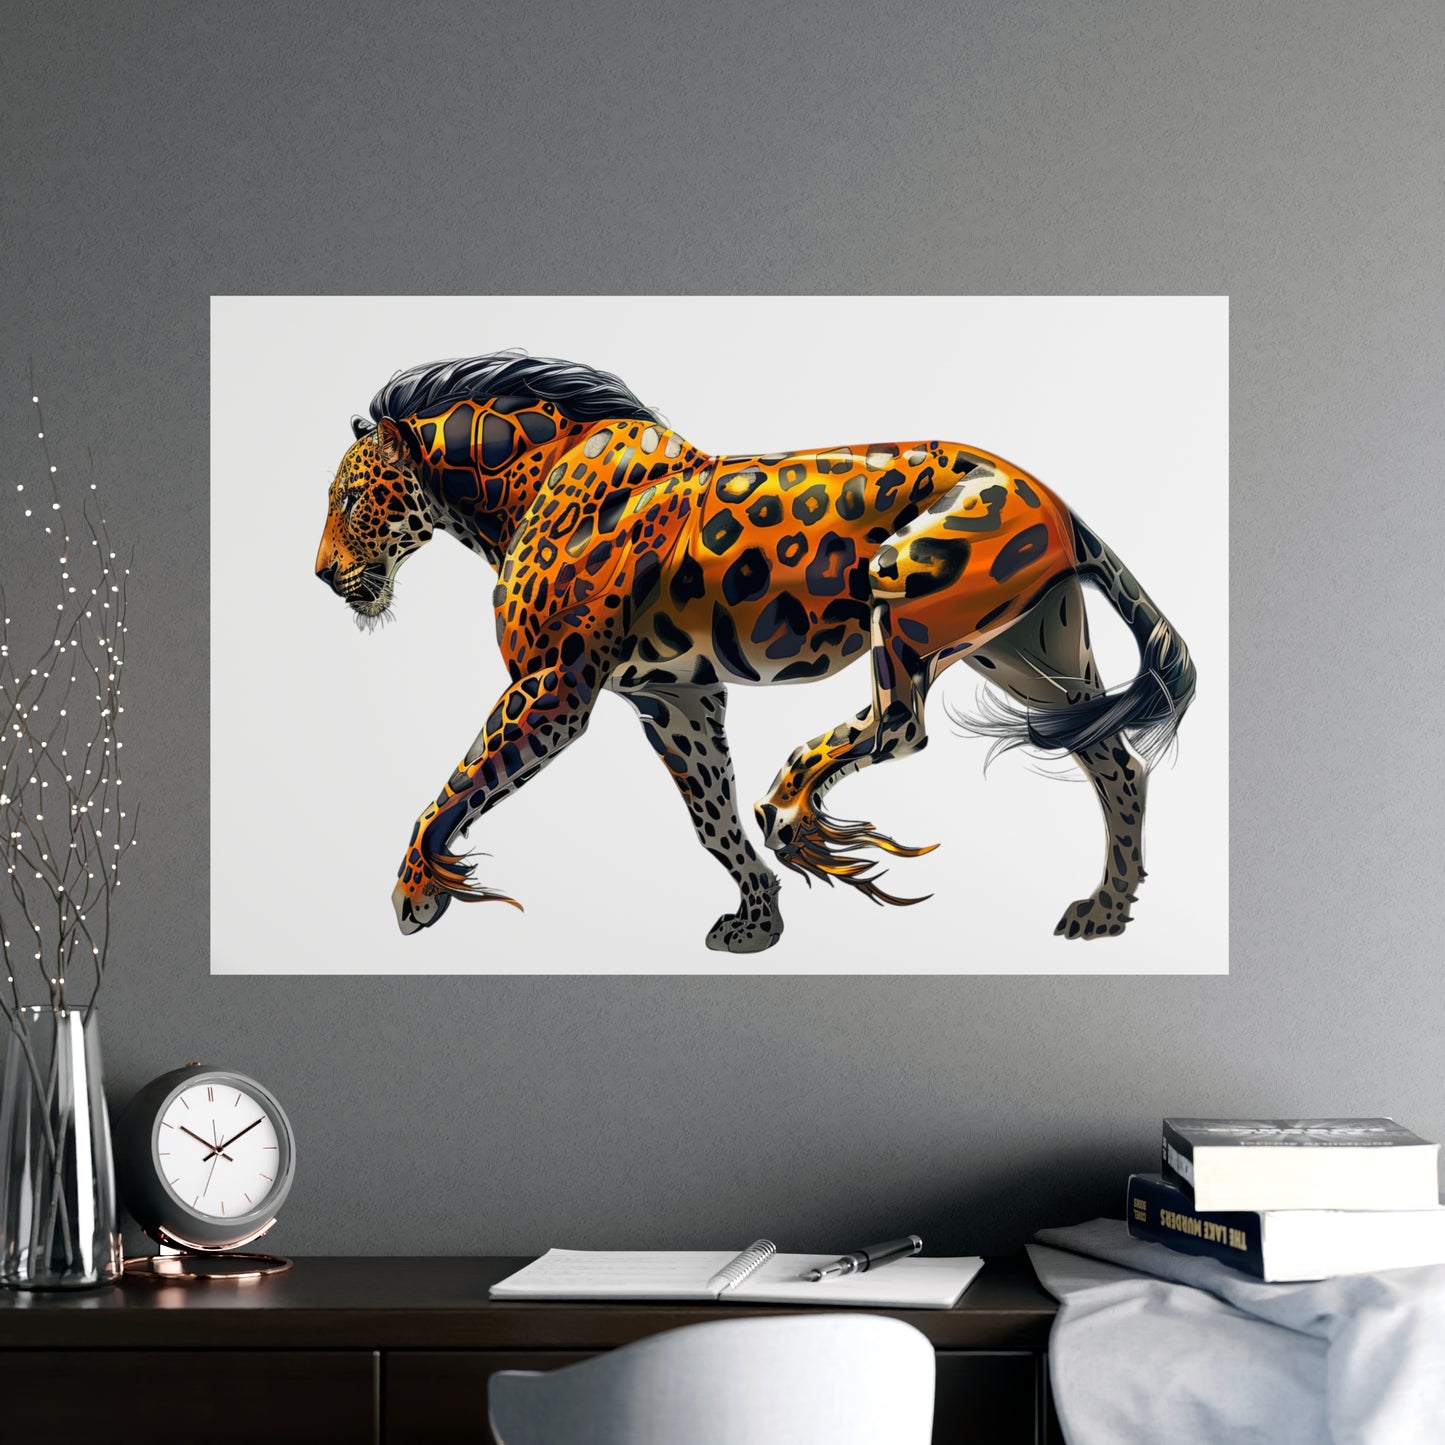 Matte Poster: Leopard/Stallion Hybrid